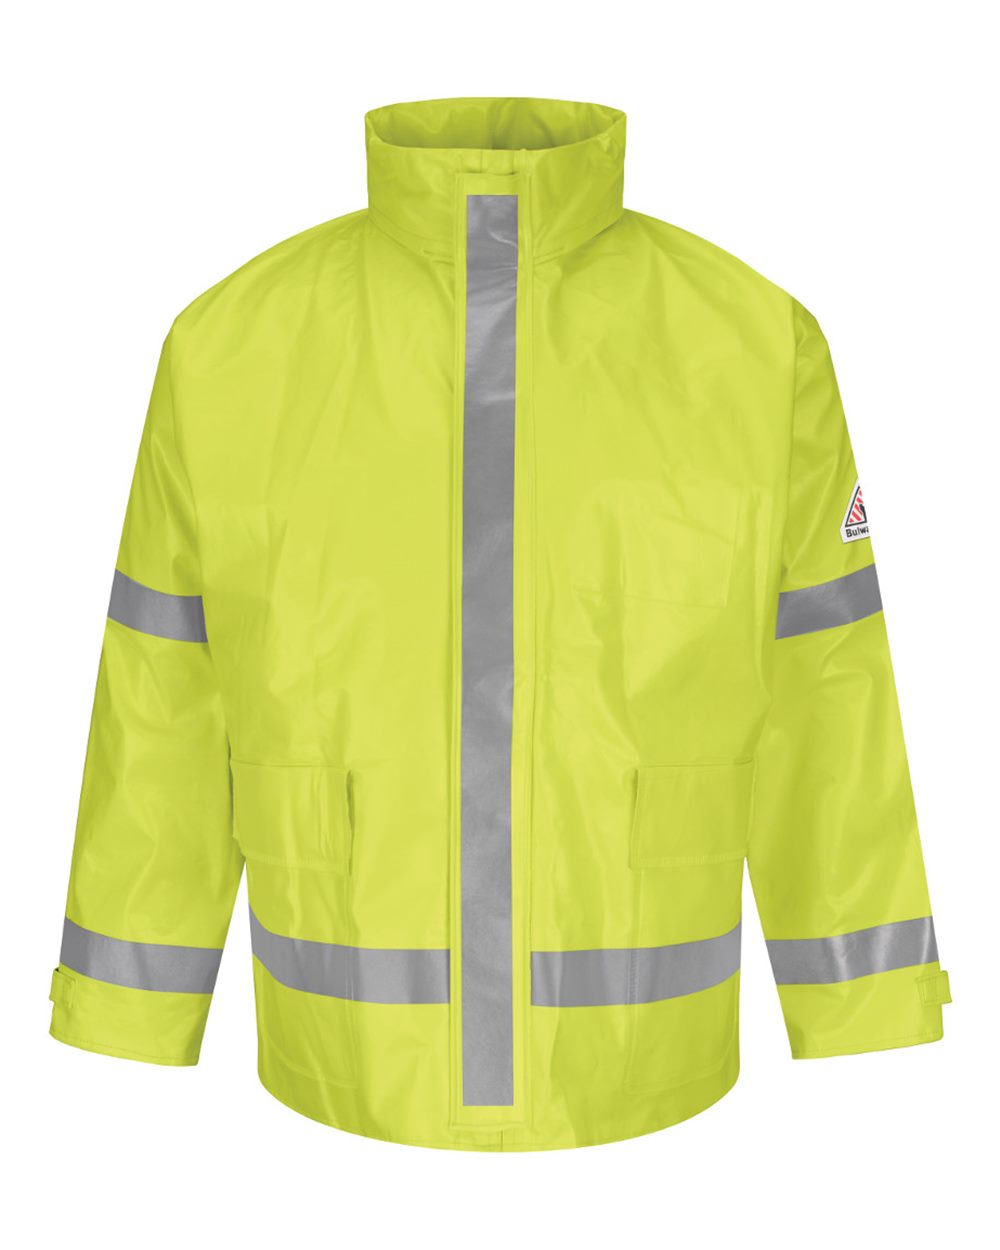 Hi-Visibility Flame-Resistant Rain Jacket-